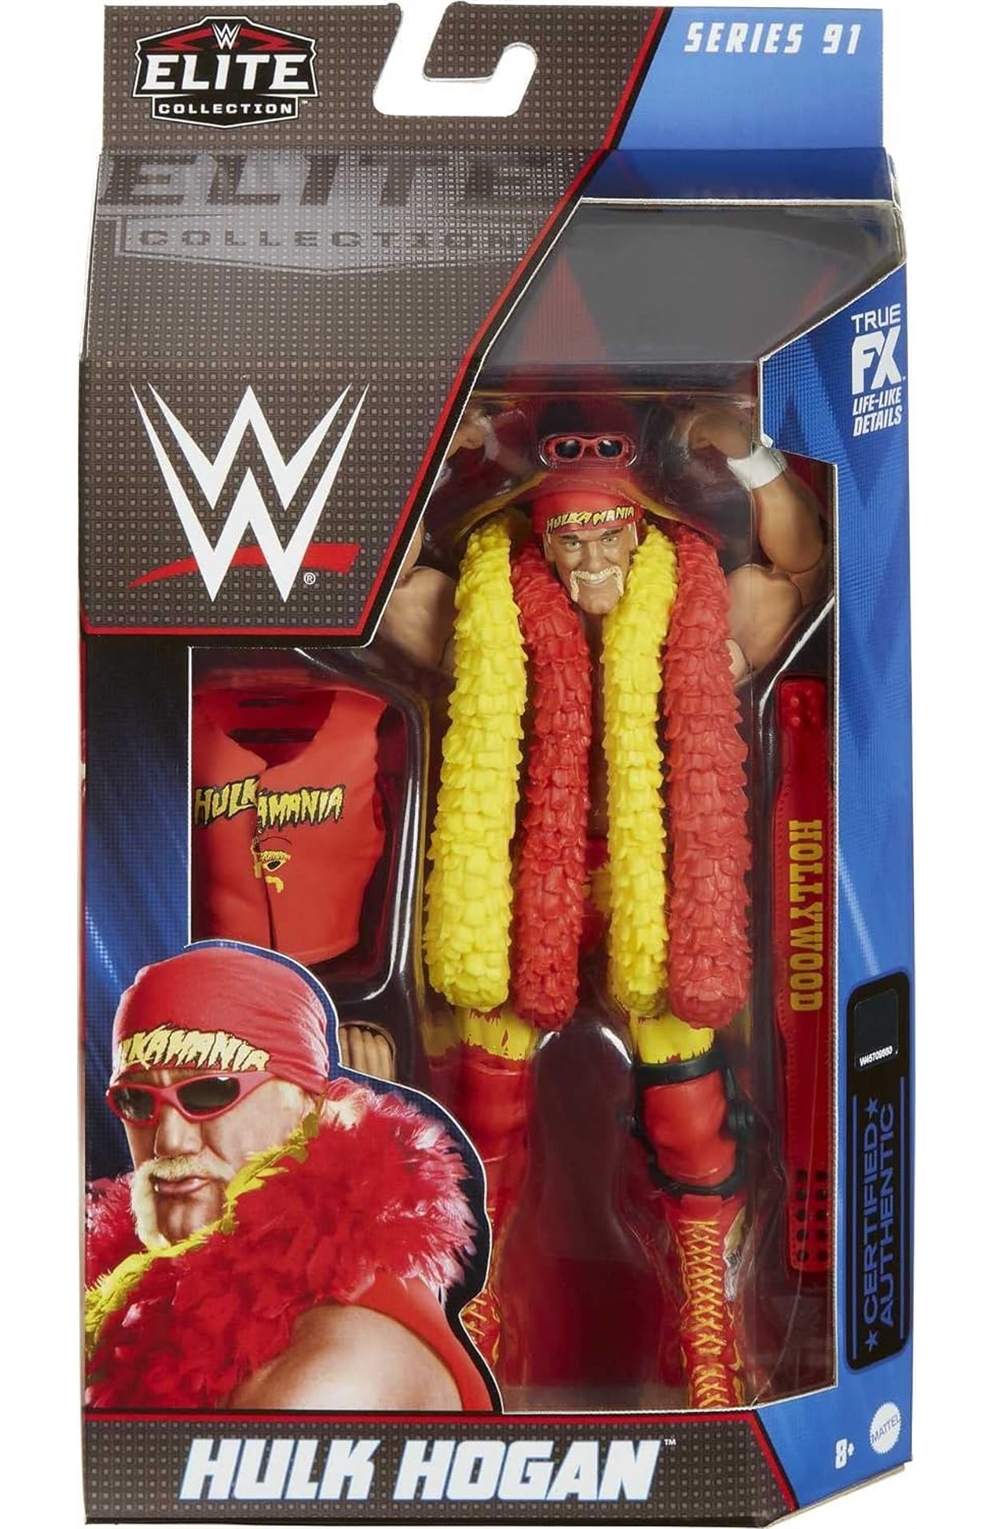 Wwe Elite Collection Action Figure Hulk Hogan 6-Inch